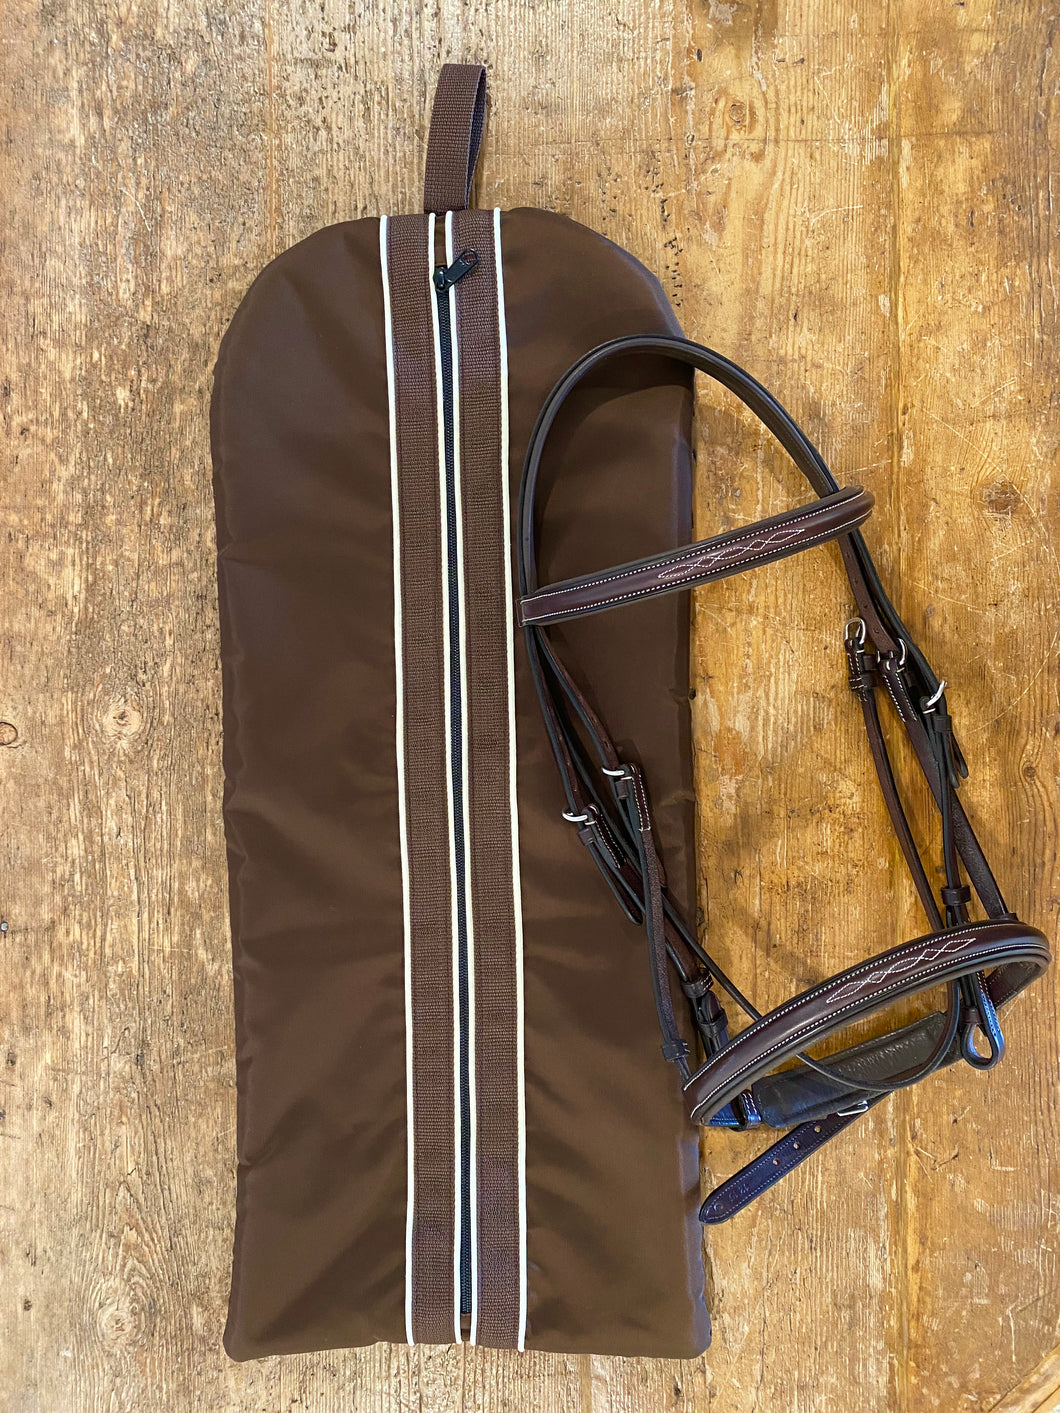 Tally Ho Custom Fleece Lined Bridle Bag